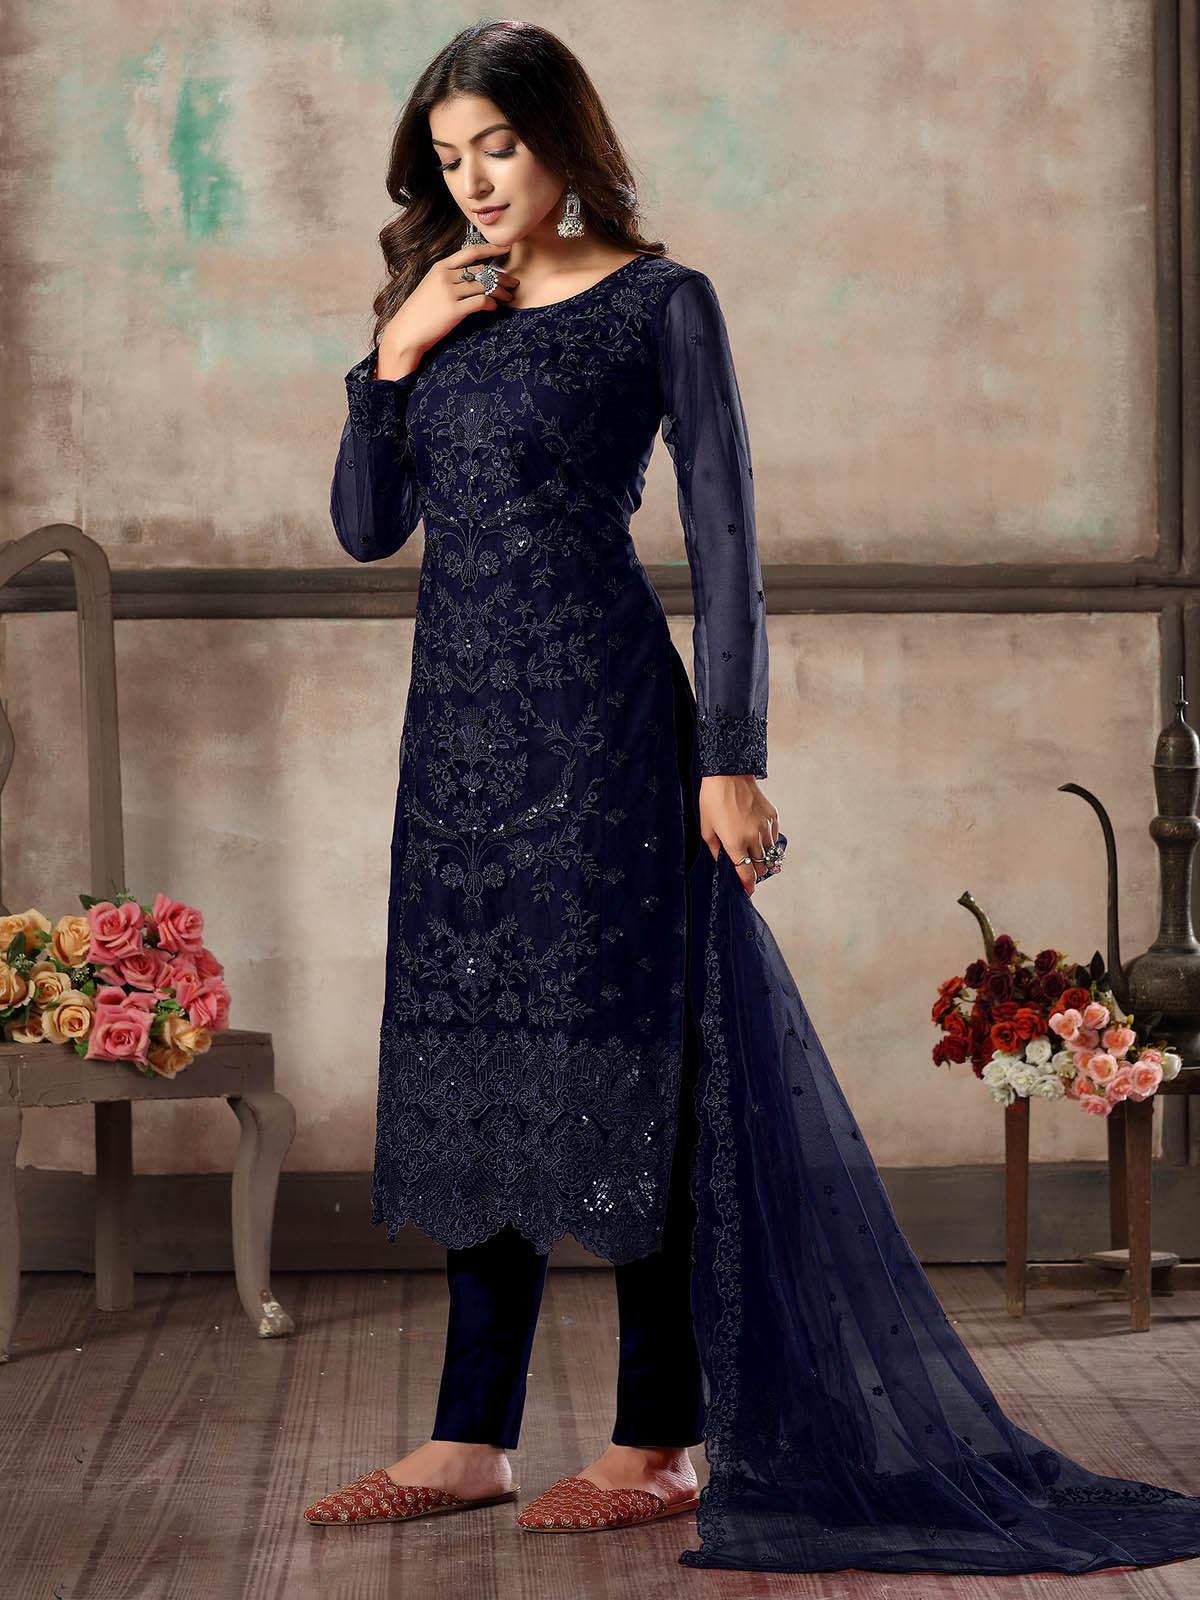 Girls Salwar Kameez - Buy Girls Salwar Suit online in India | G3Fashion